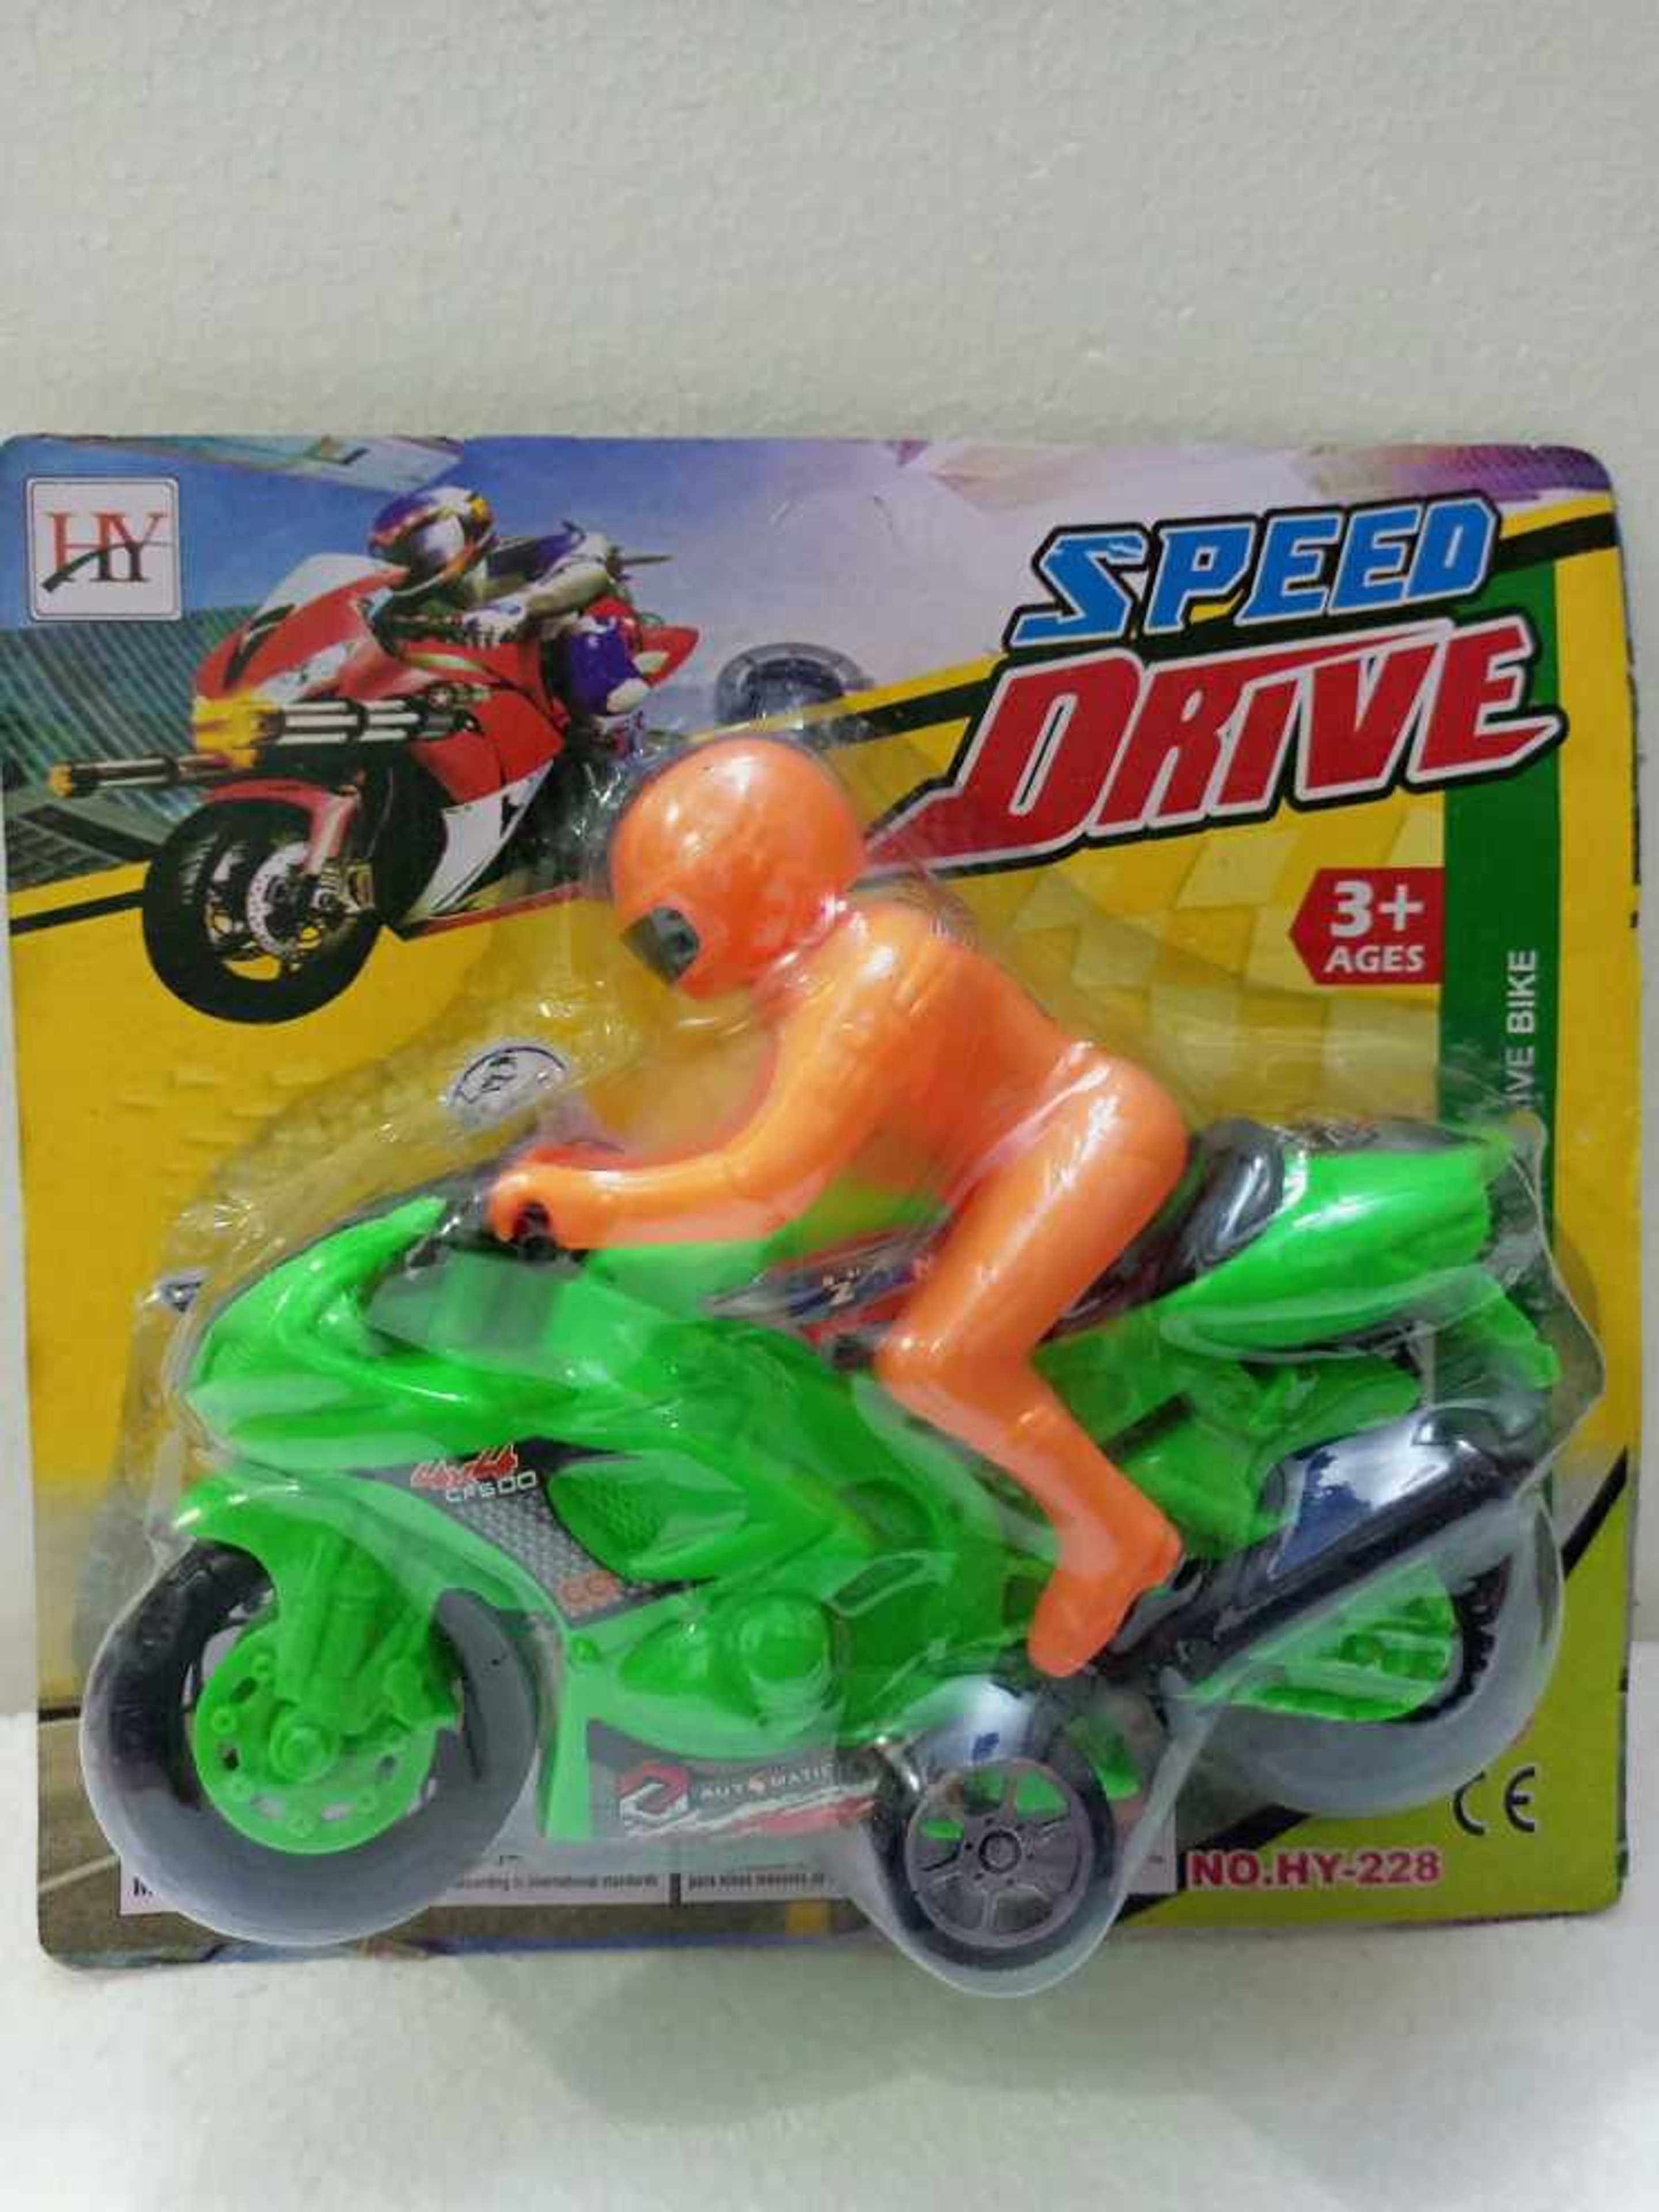 Bick Speed Drive Kids toy